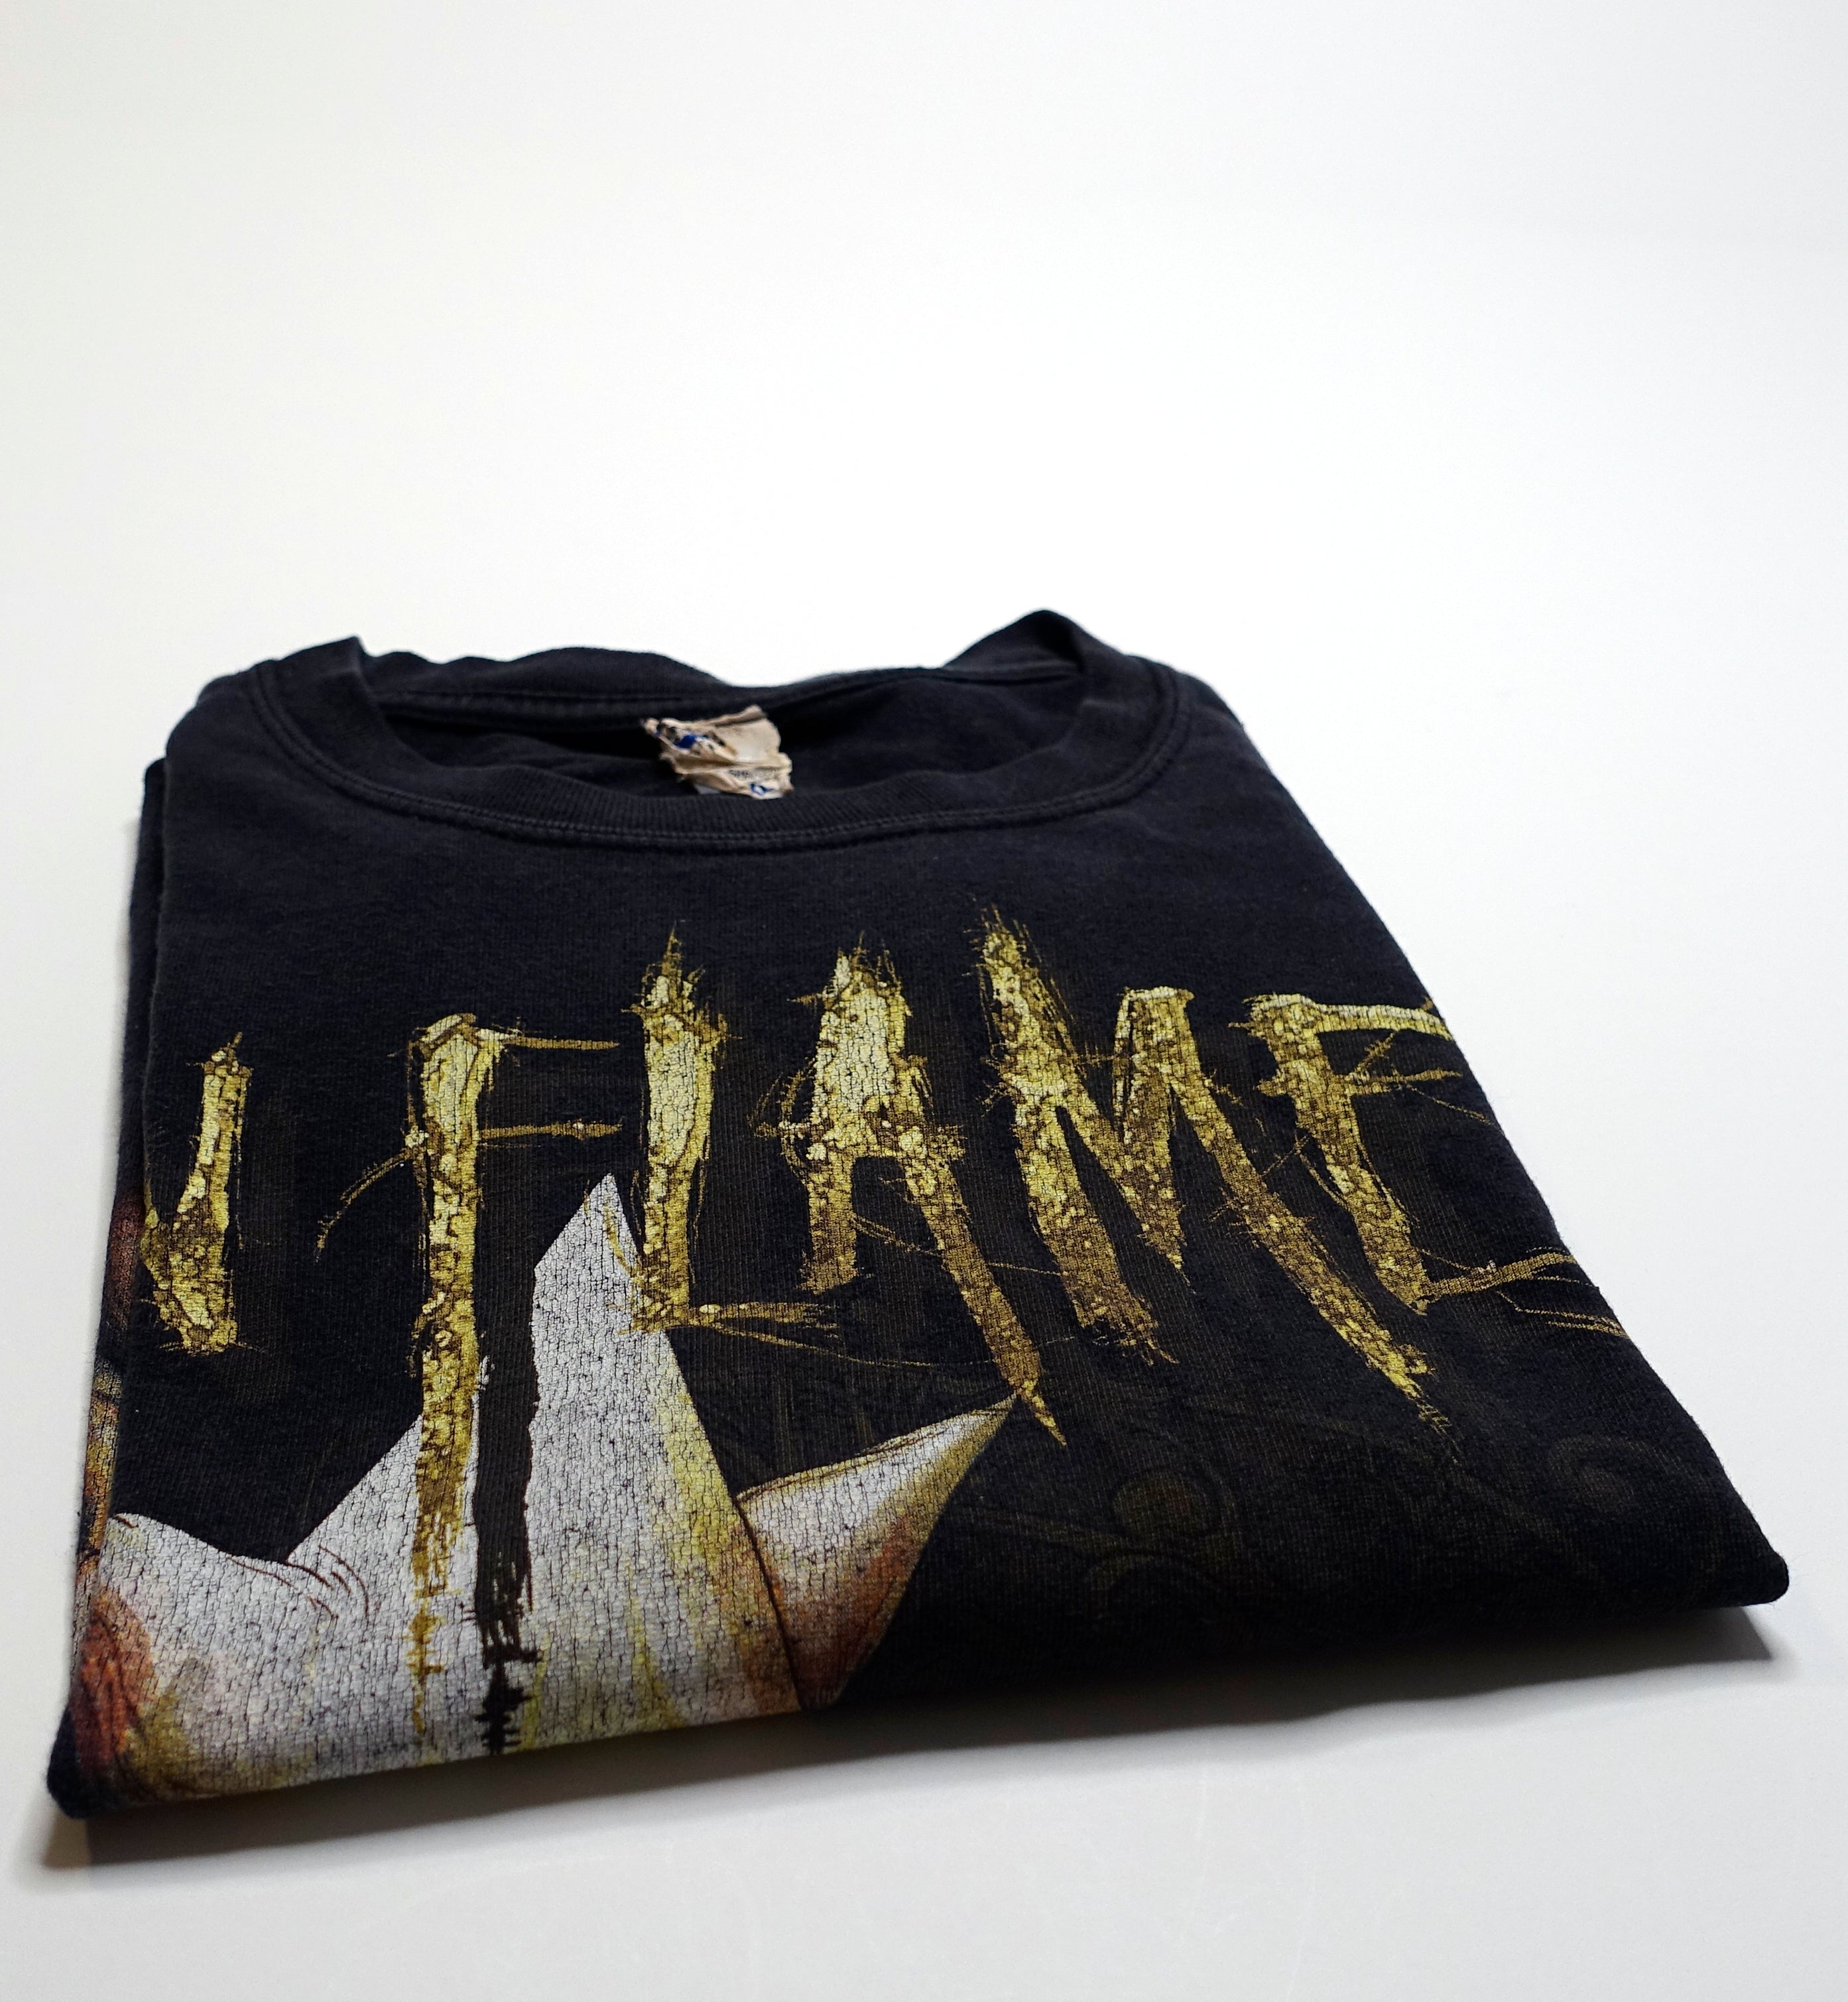 In Flames - A Sense Of Purpose 2008 Tour Shirt Size XL